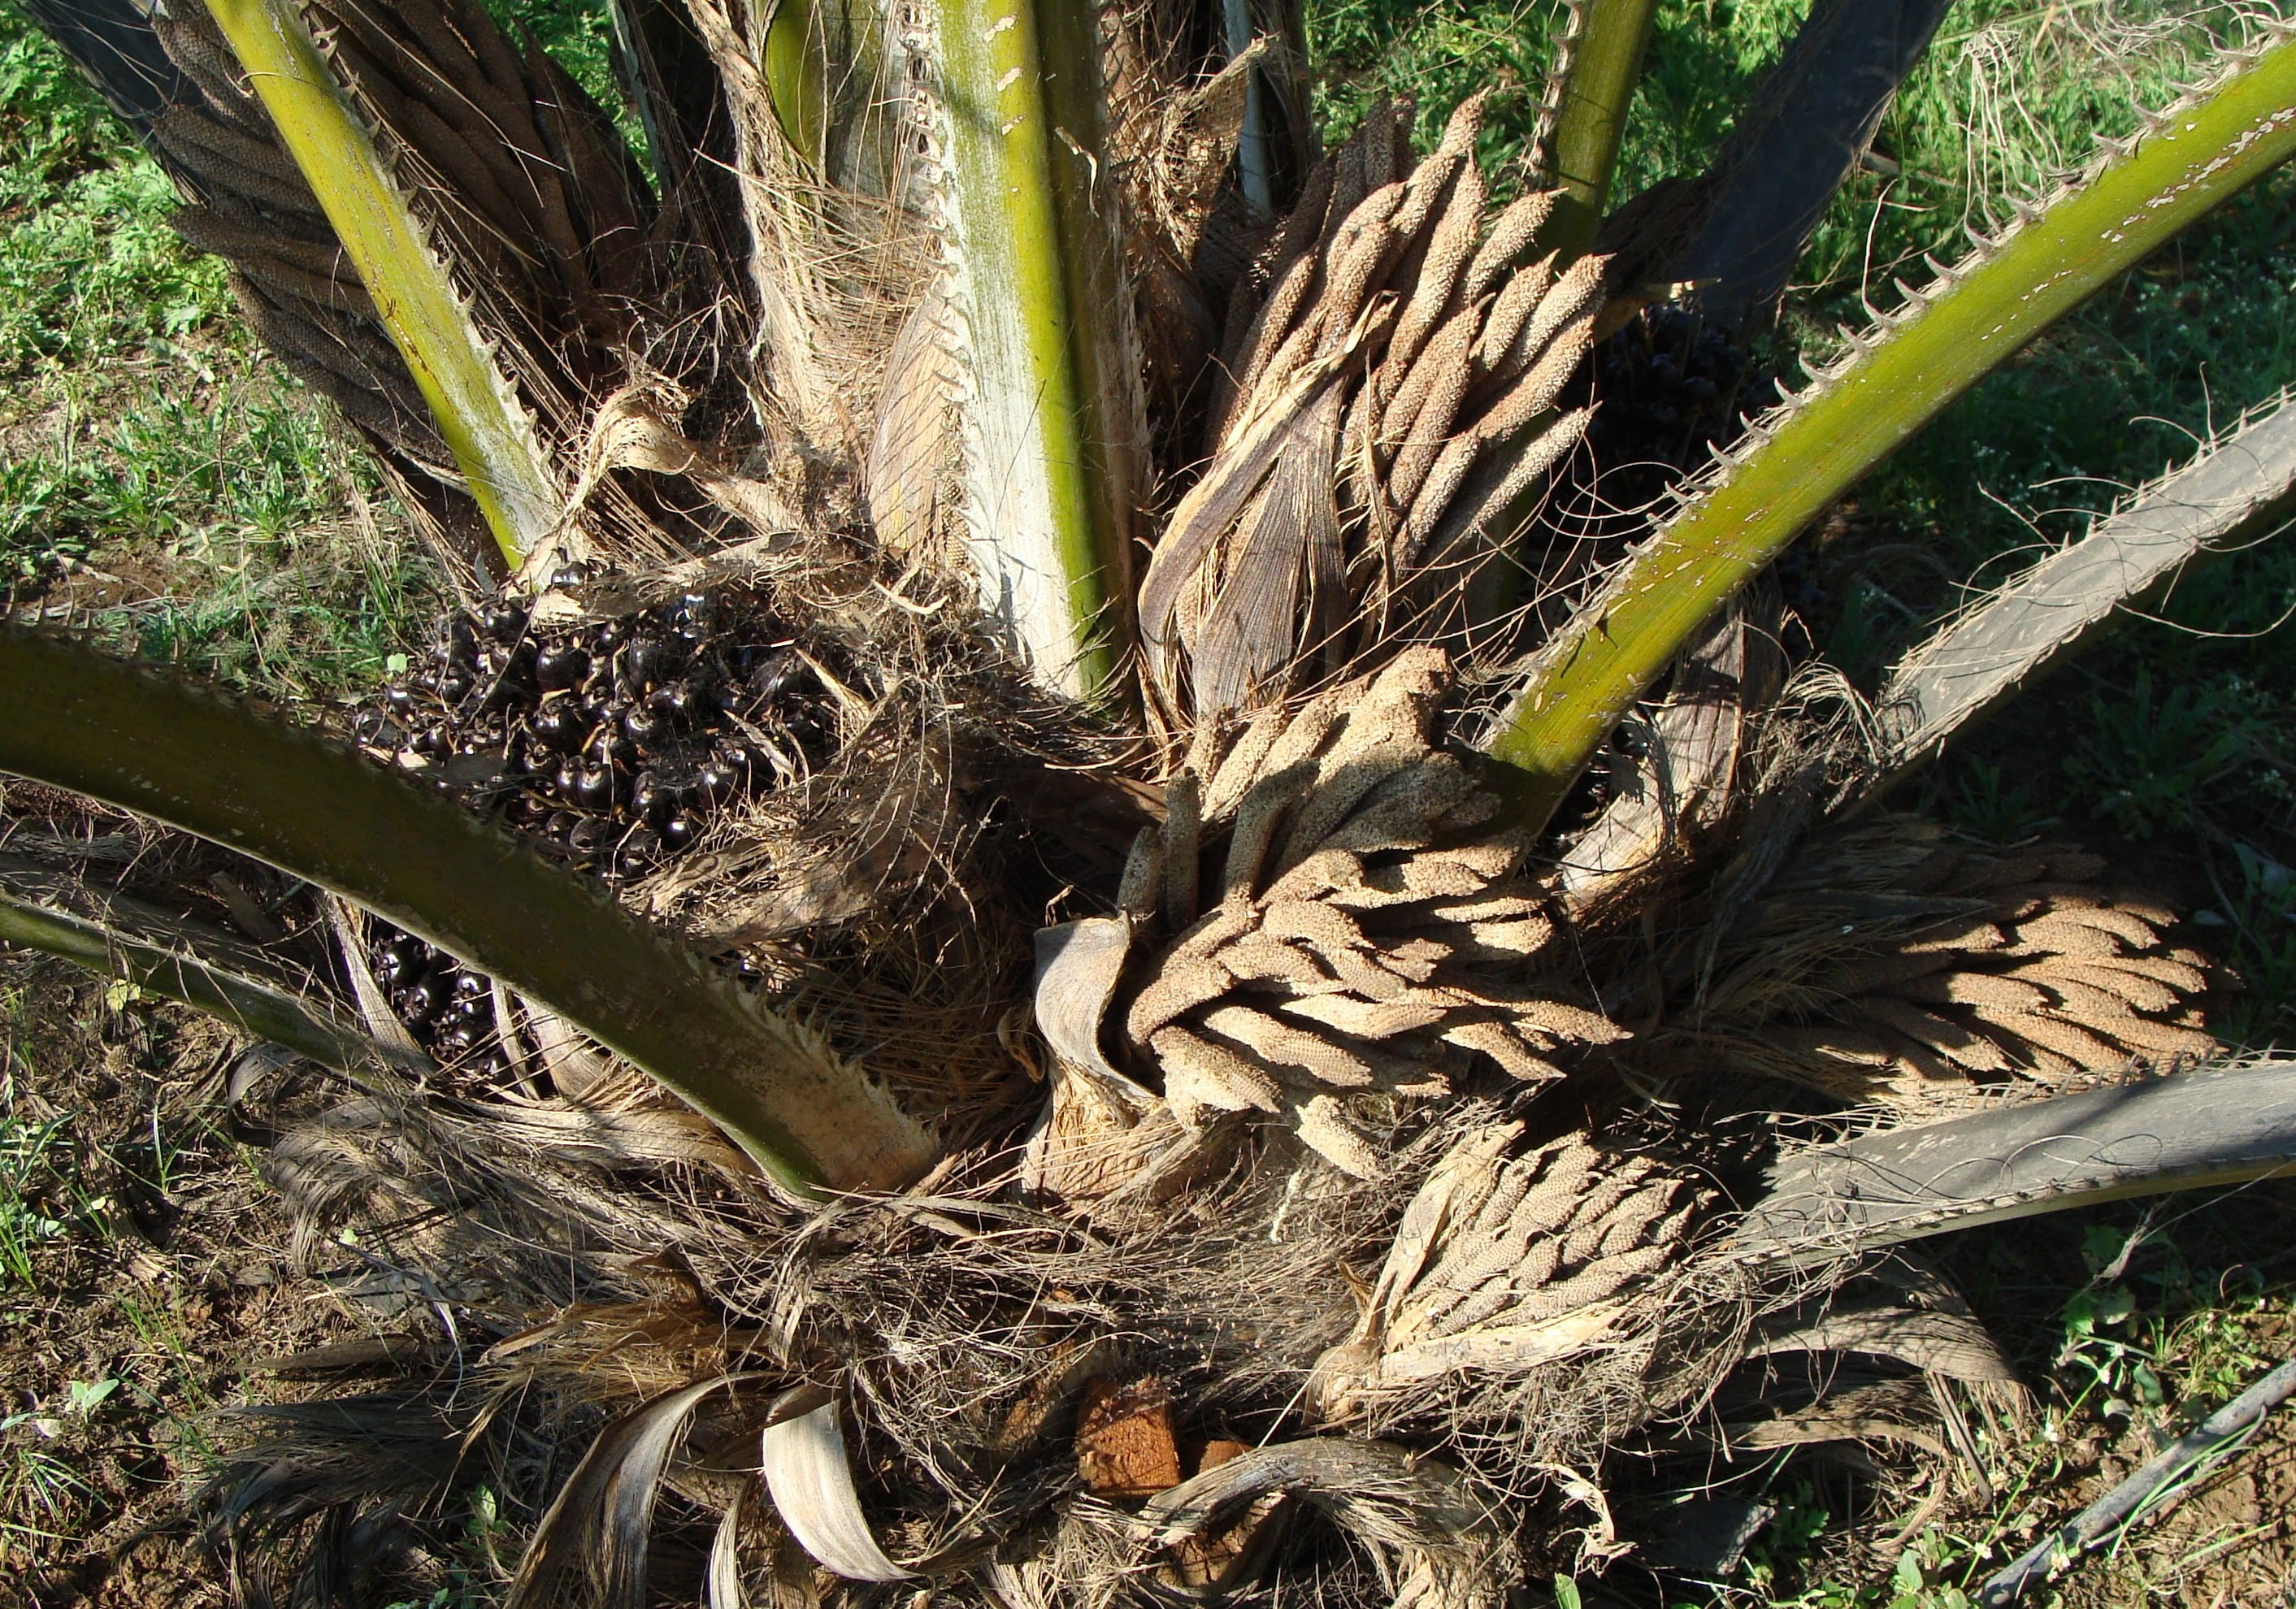 oil palm, fruit bunch, male flower, horticulture, karnataka